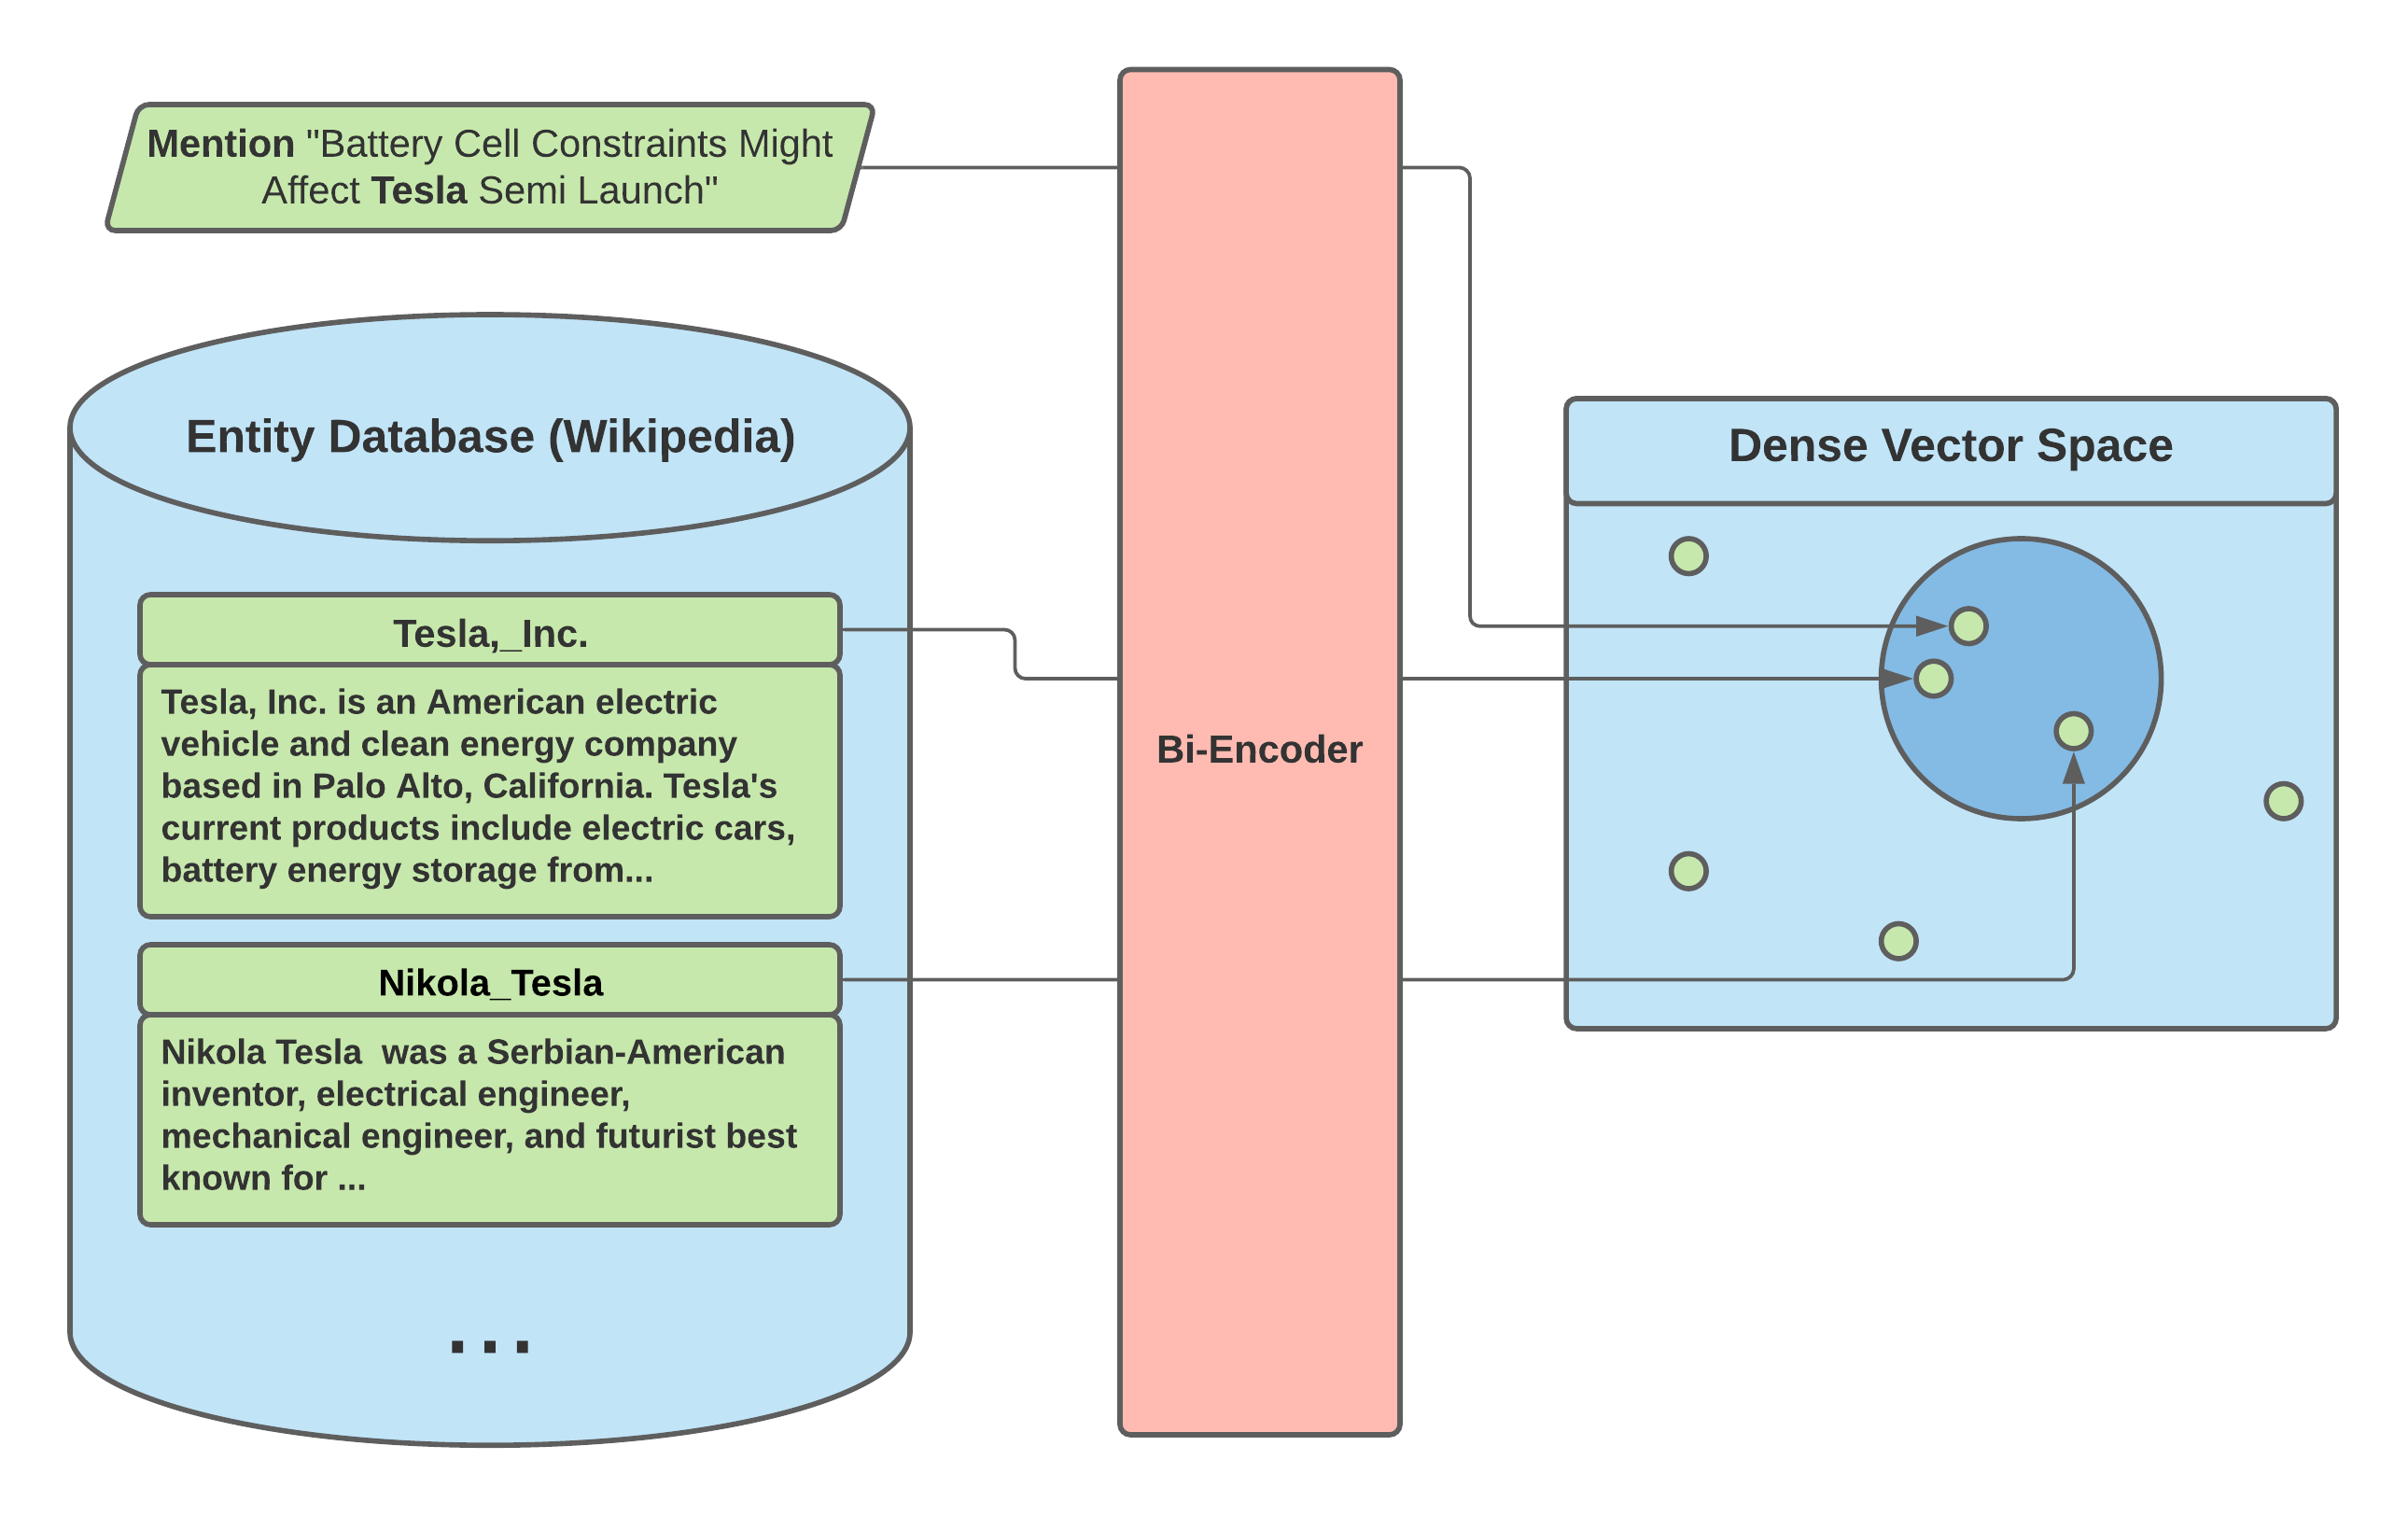 bi-encoder model